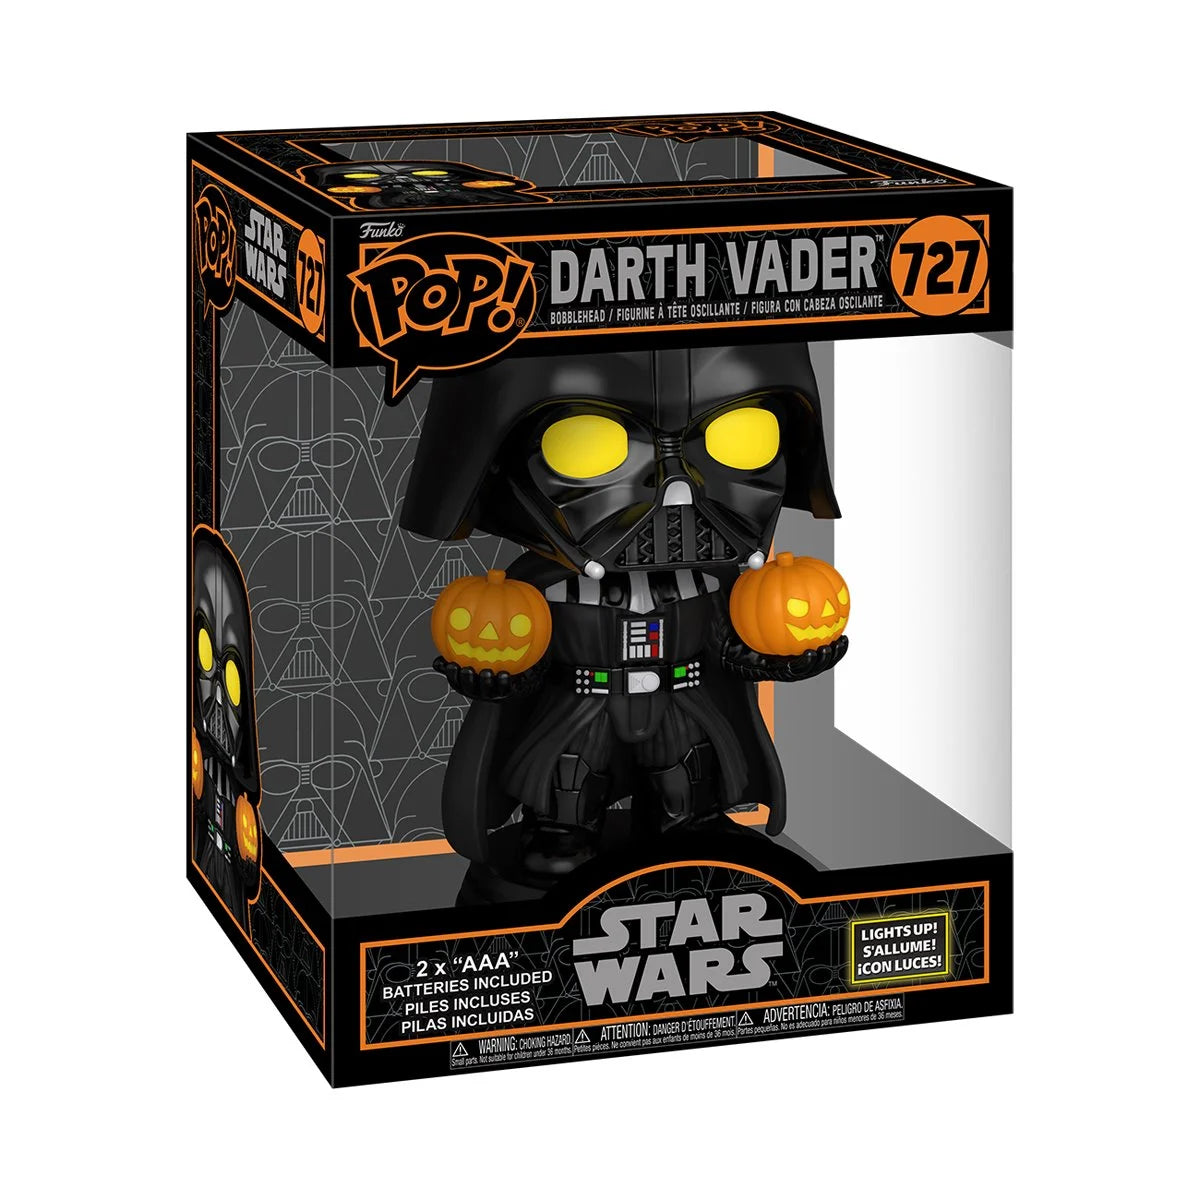 Star Wars Darth Vader Halloween Light-Up Super Funko Pop! Vinyl Figure #727